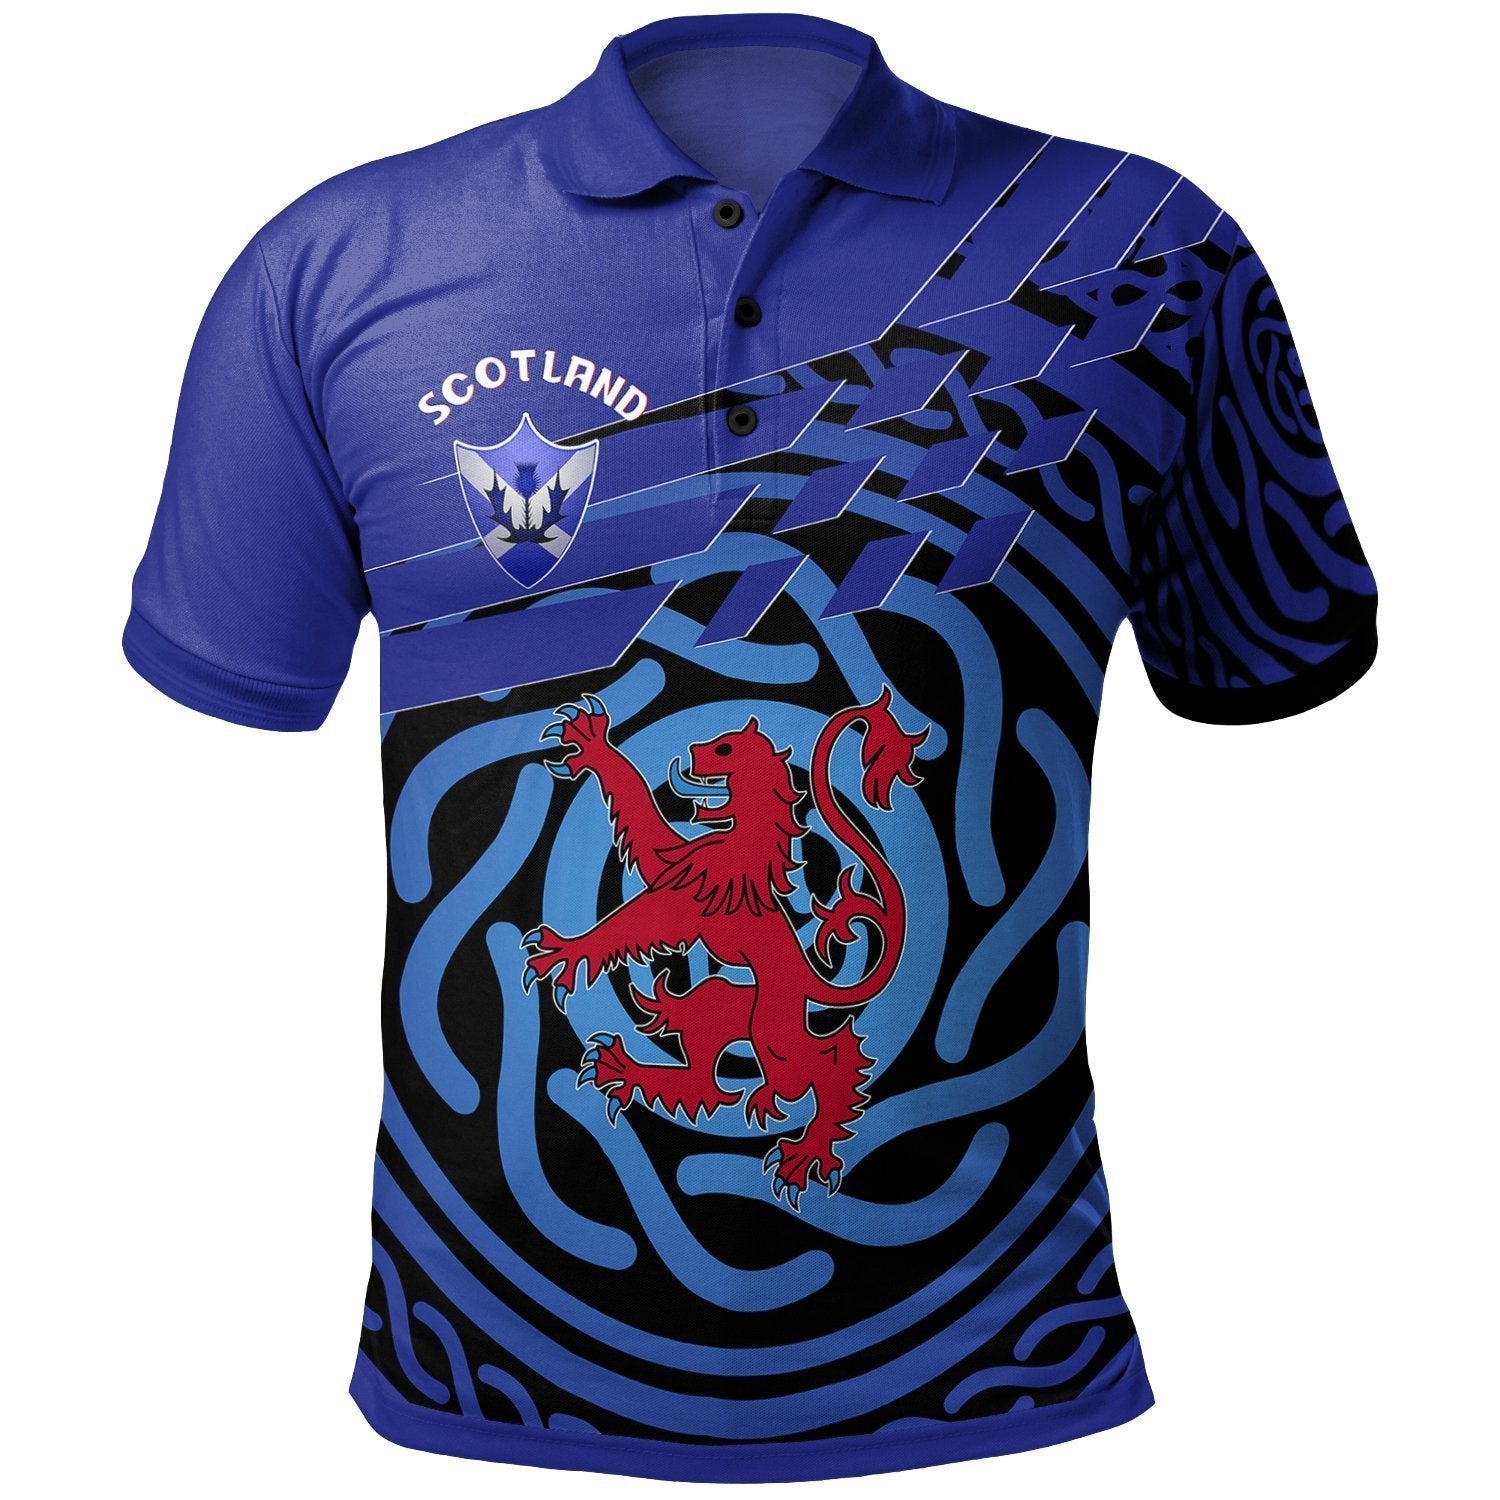 Scotland Polo Shirt Scotland Symbol With Celtic Patterns